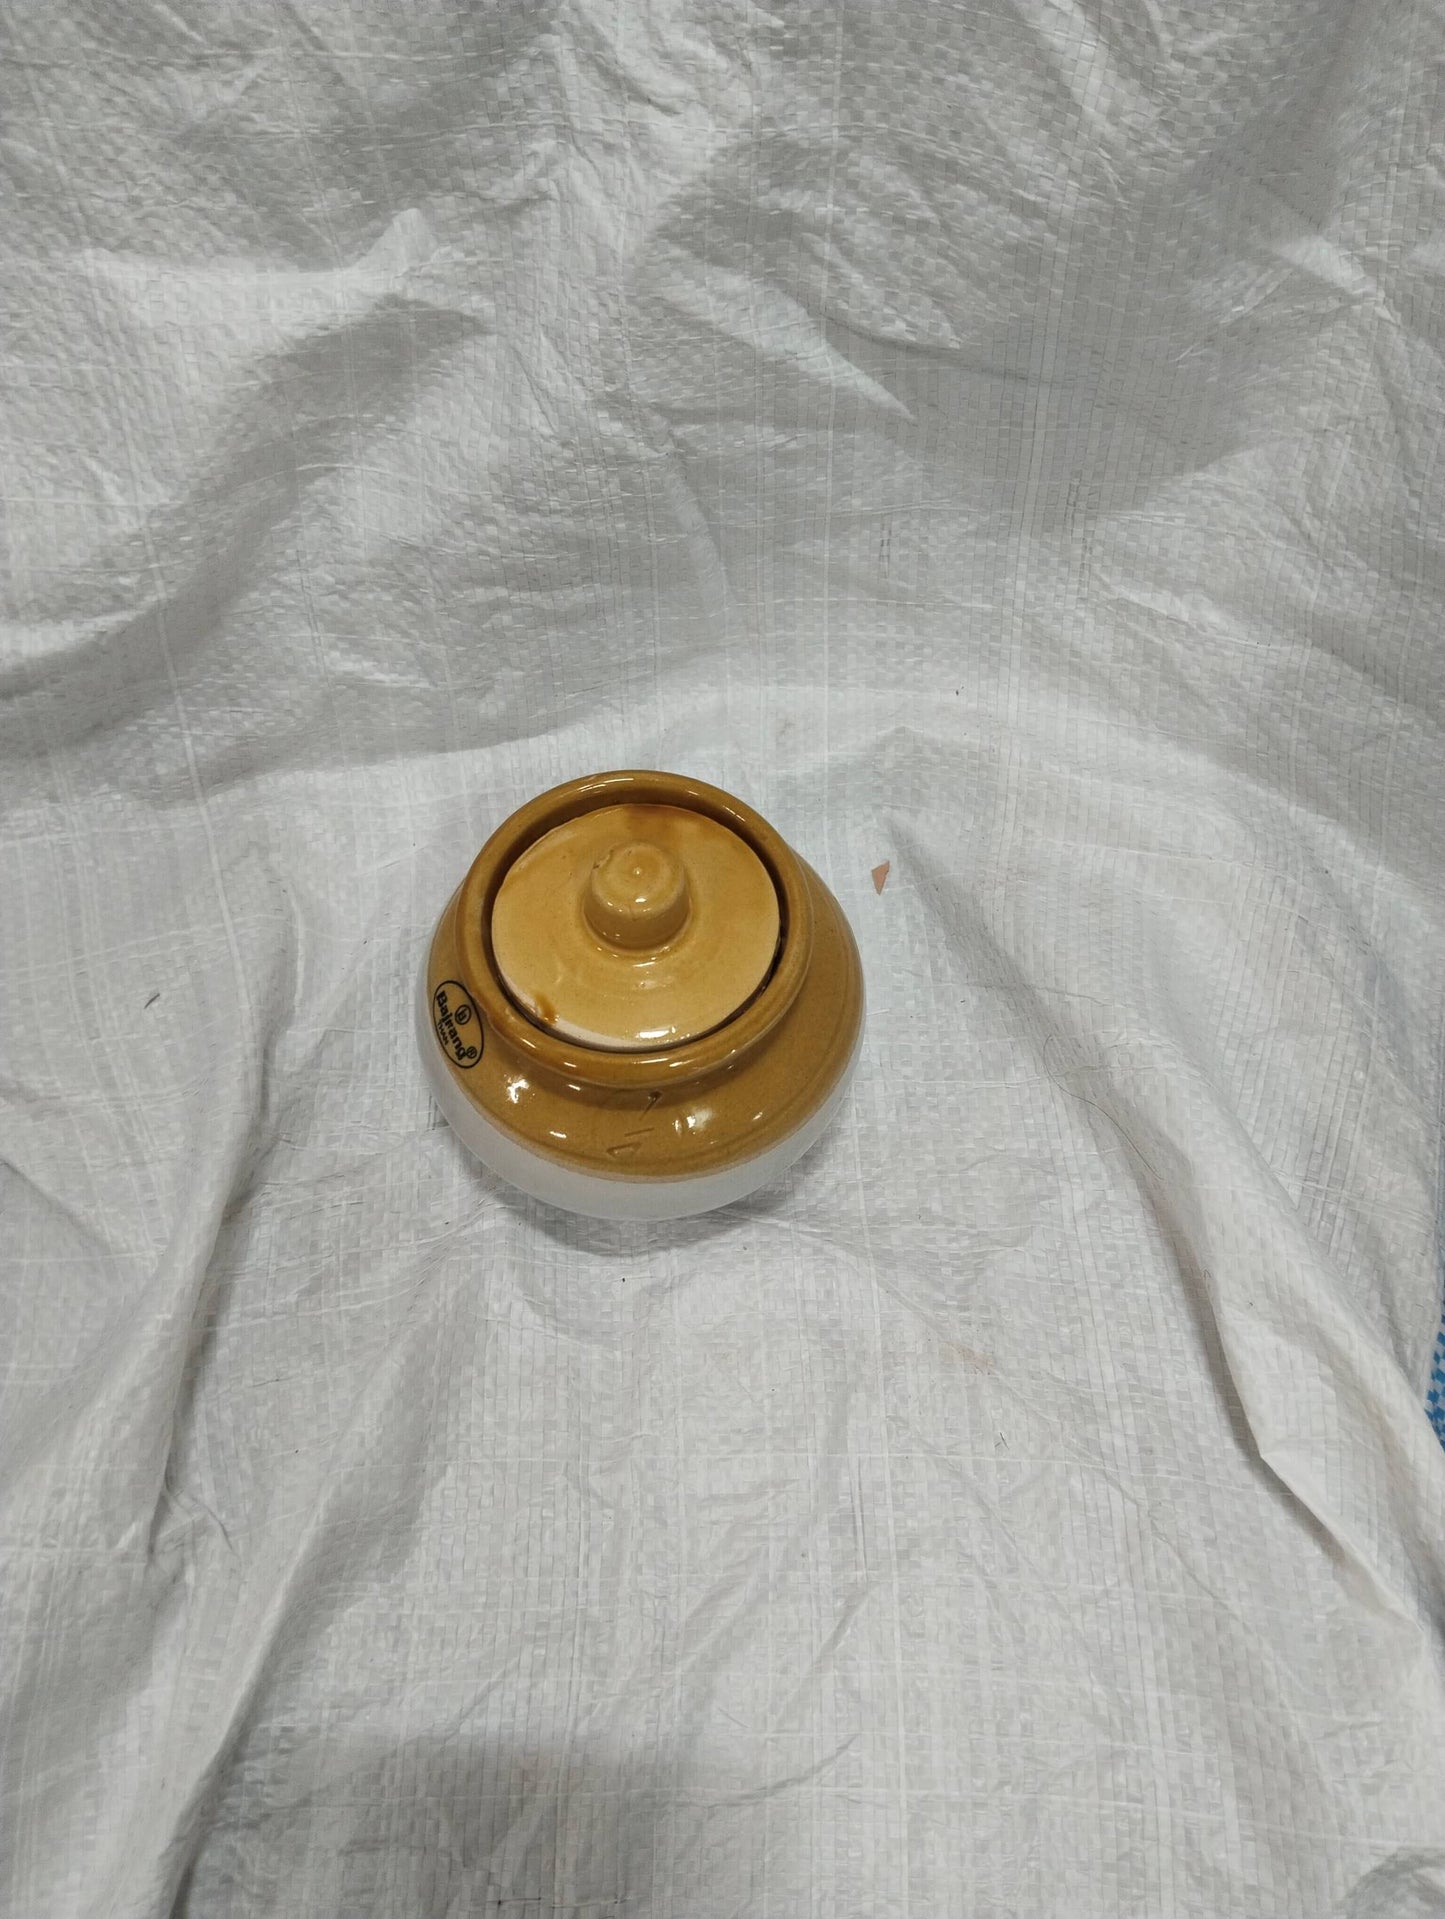 Indian Handmade Ceramic Pickle Jar (Round) With Lid/Achar Barni - 4" Height